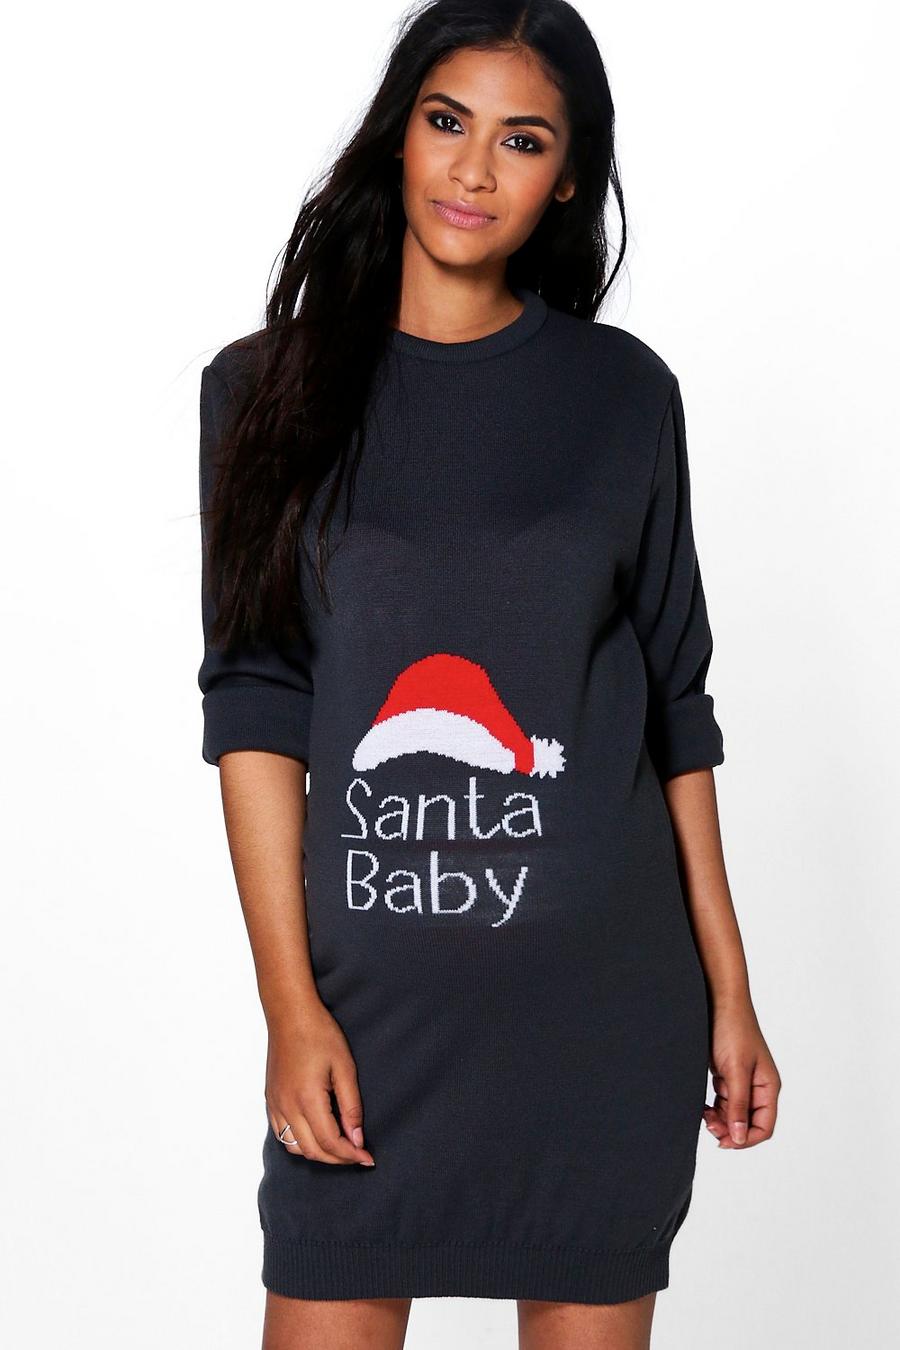 Grey Maternity 'Santa Baby' Christmas Jumper Dress image number 1